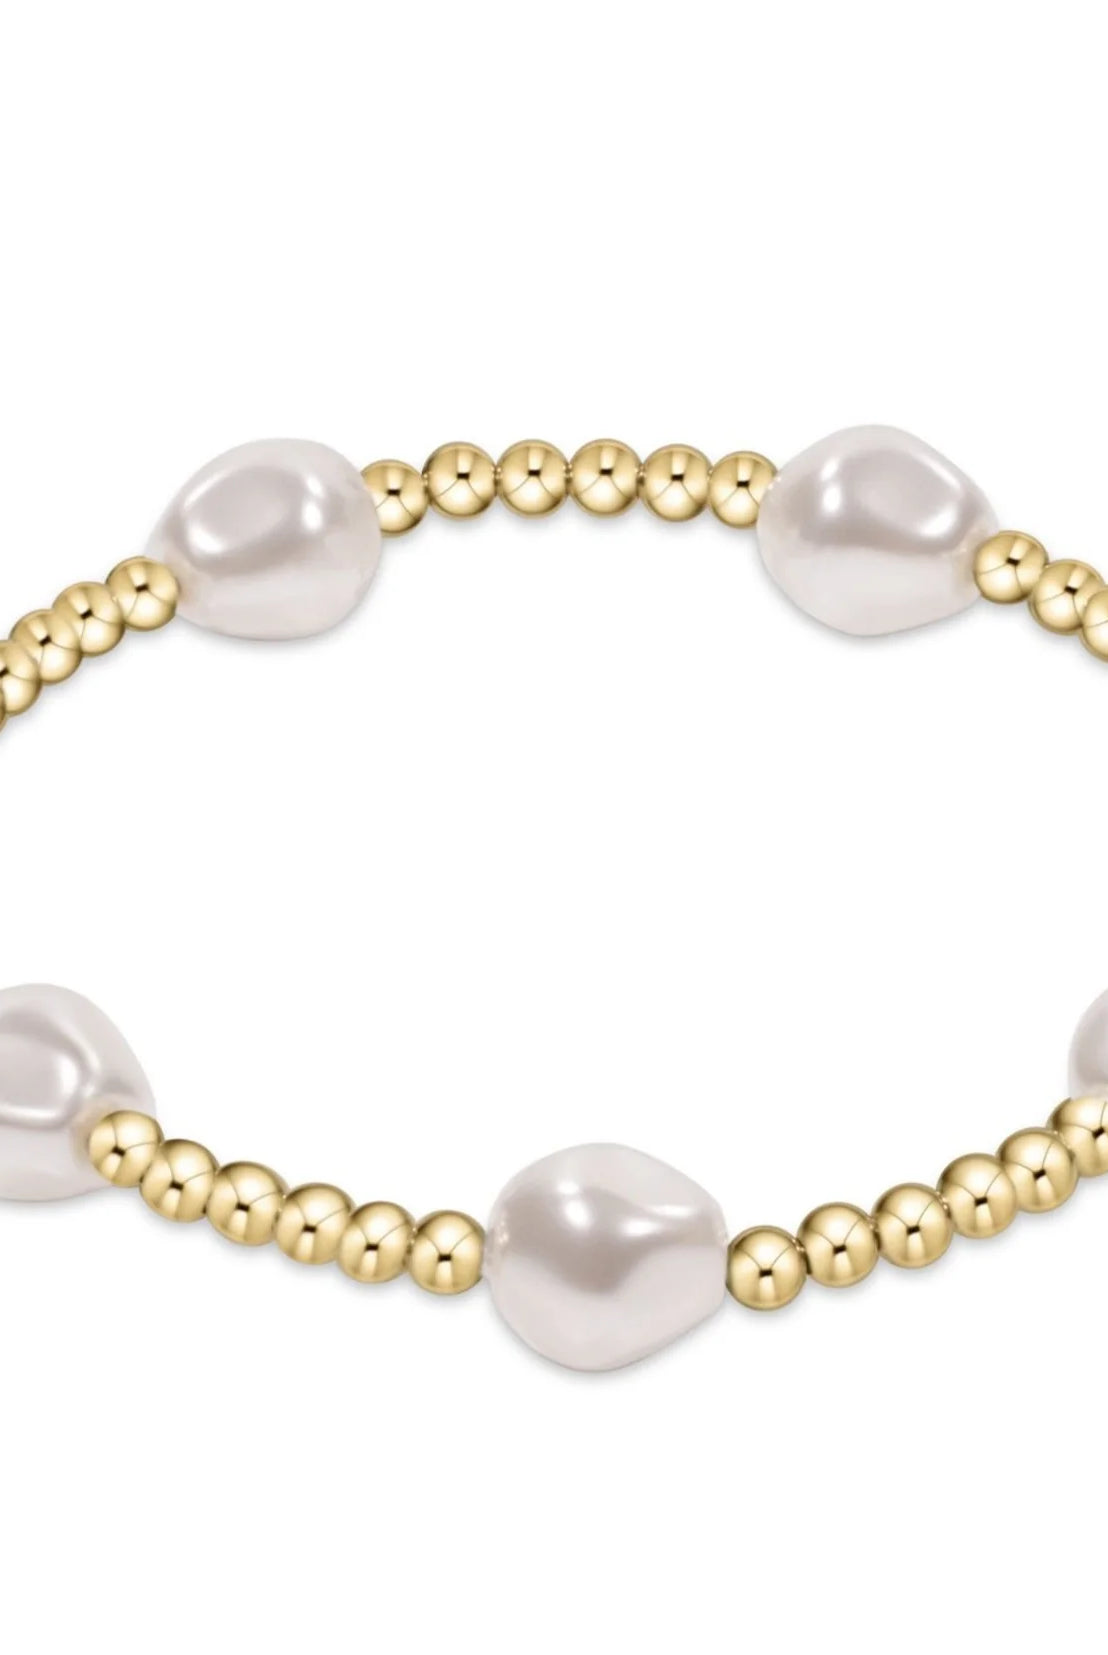 EXTENDS Admire Gold 3mm Pearl Bracelet-Bracelets-eNewton-The Lovely Closet, Women's Fashion Boutique in Alexandria, KY